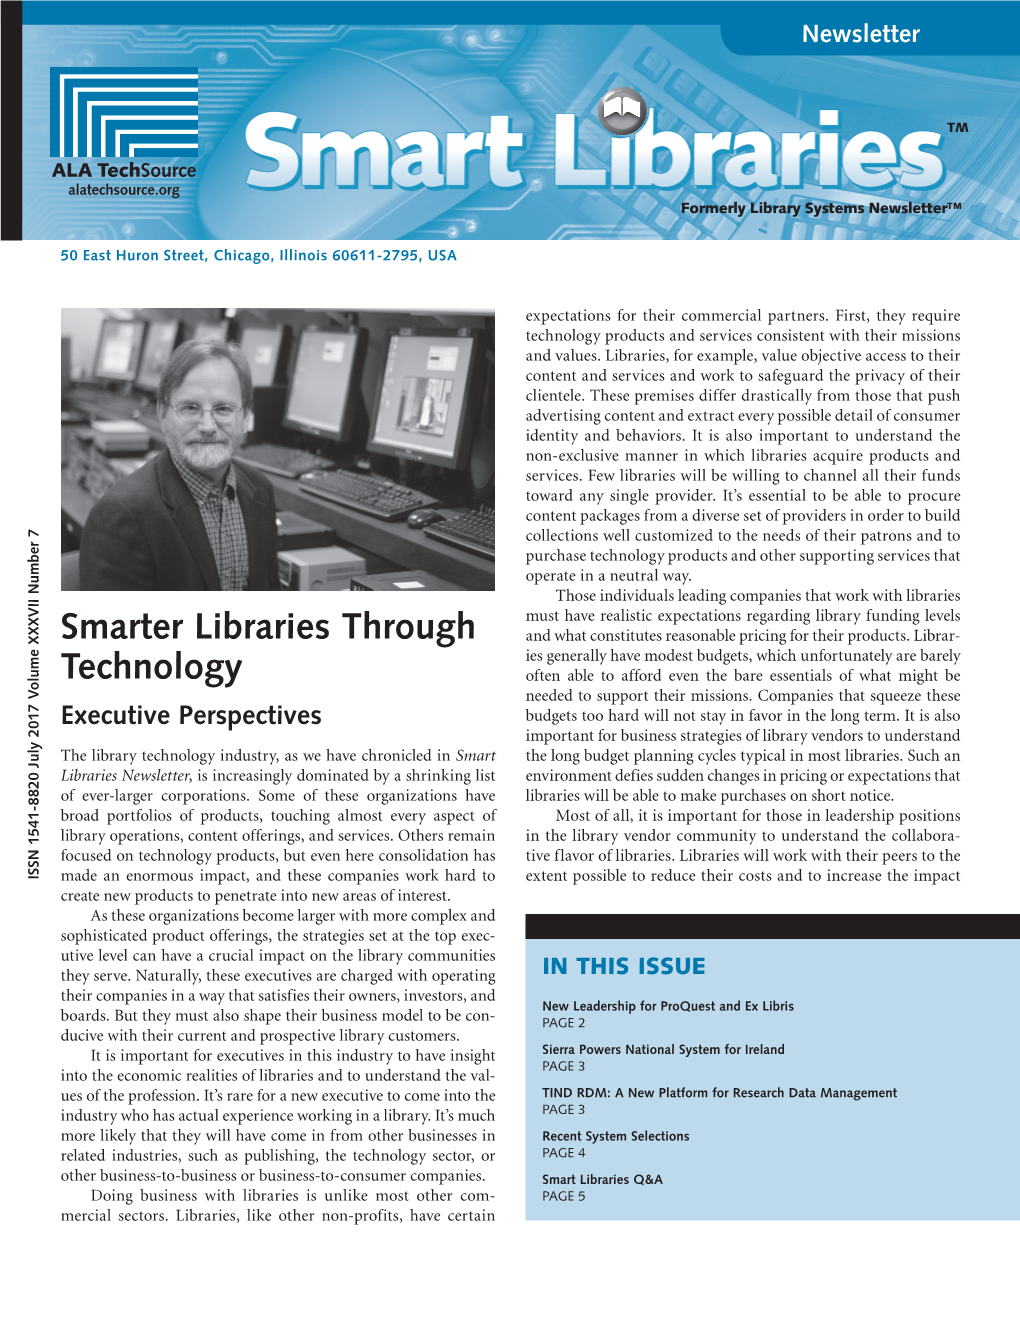 Smarter Libraries Through Technology